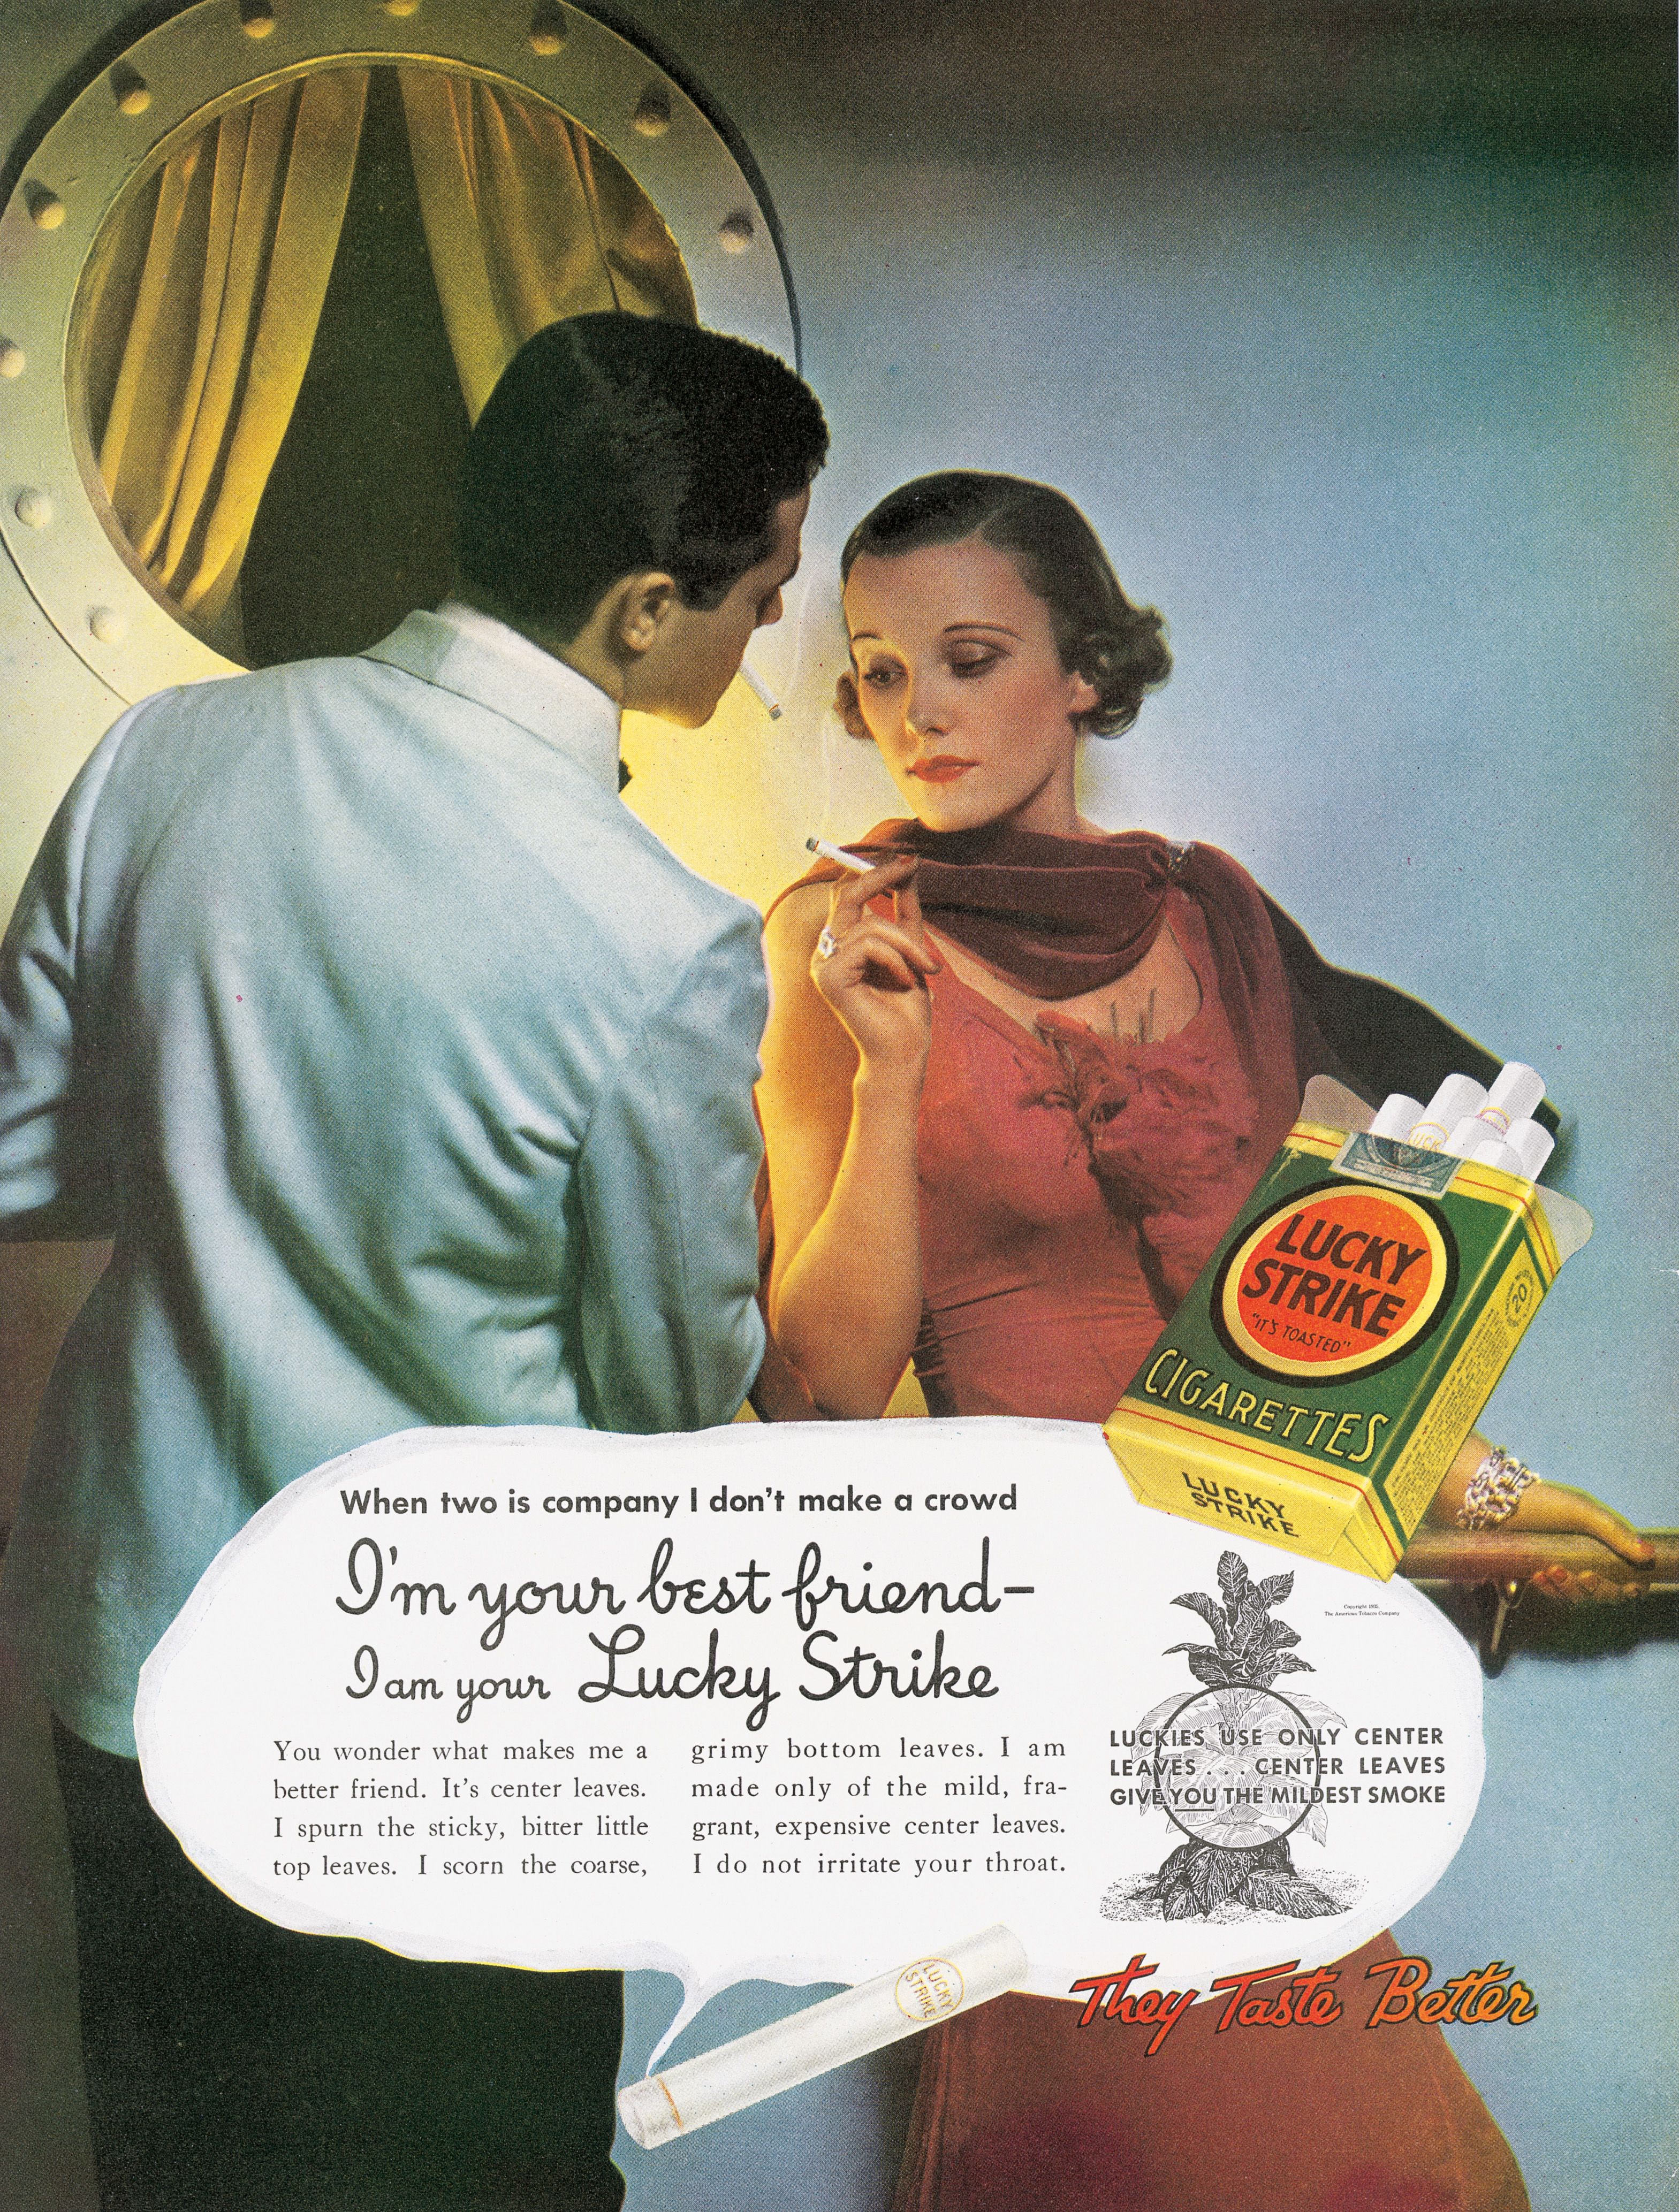 Vintage cigarette and alcohol ads